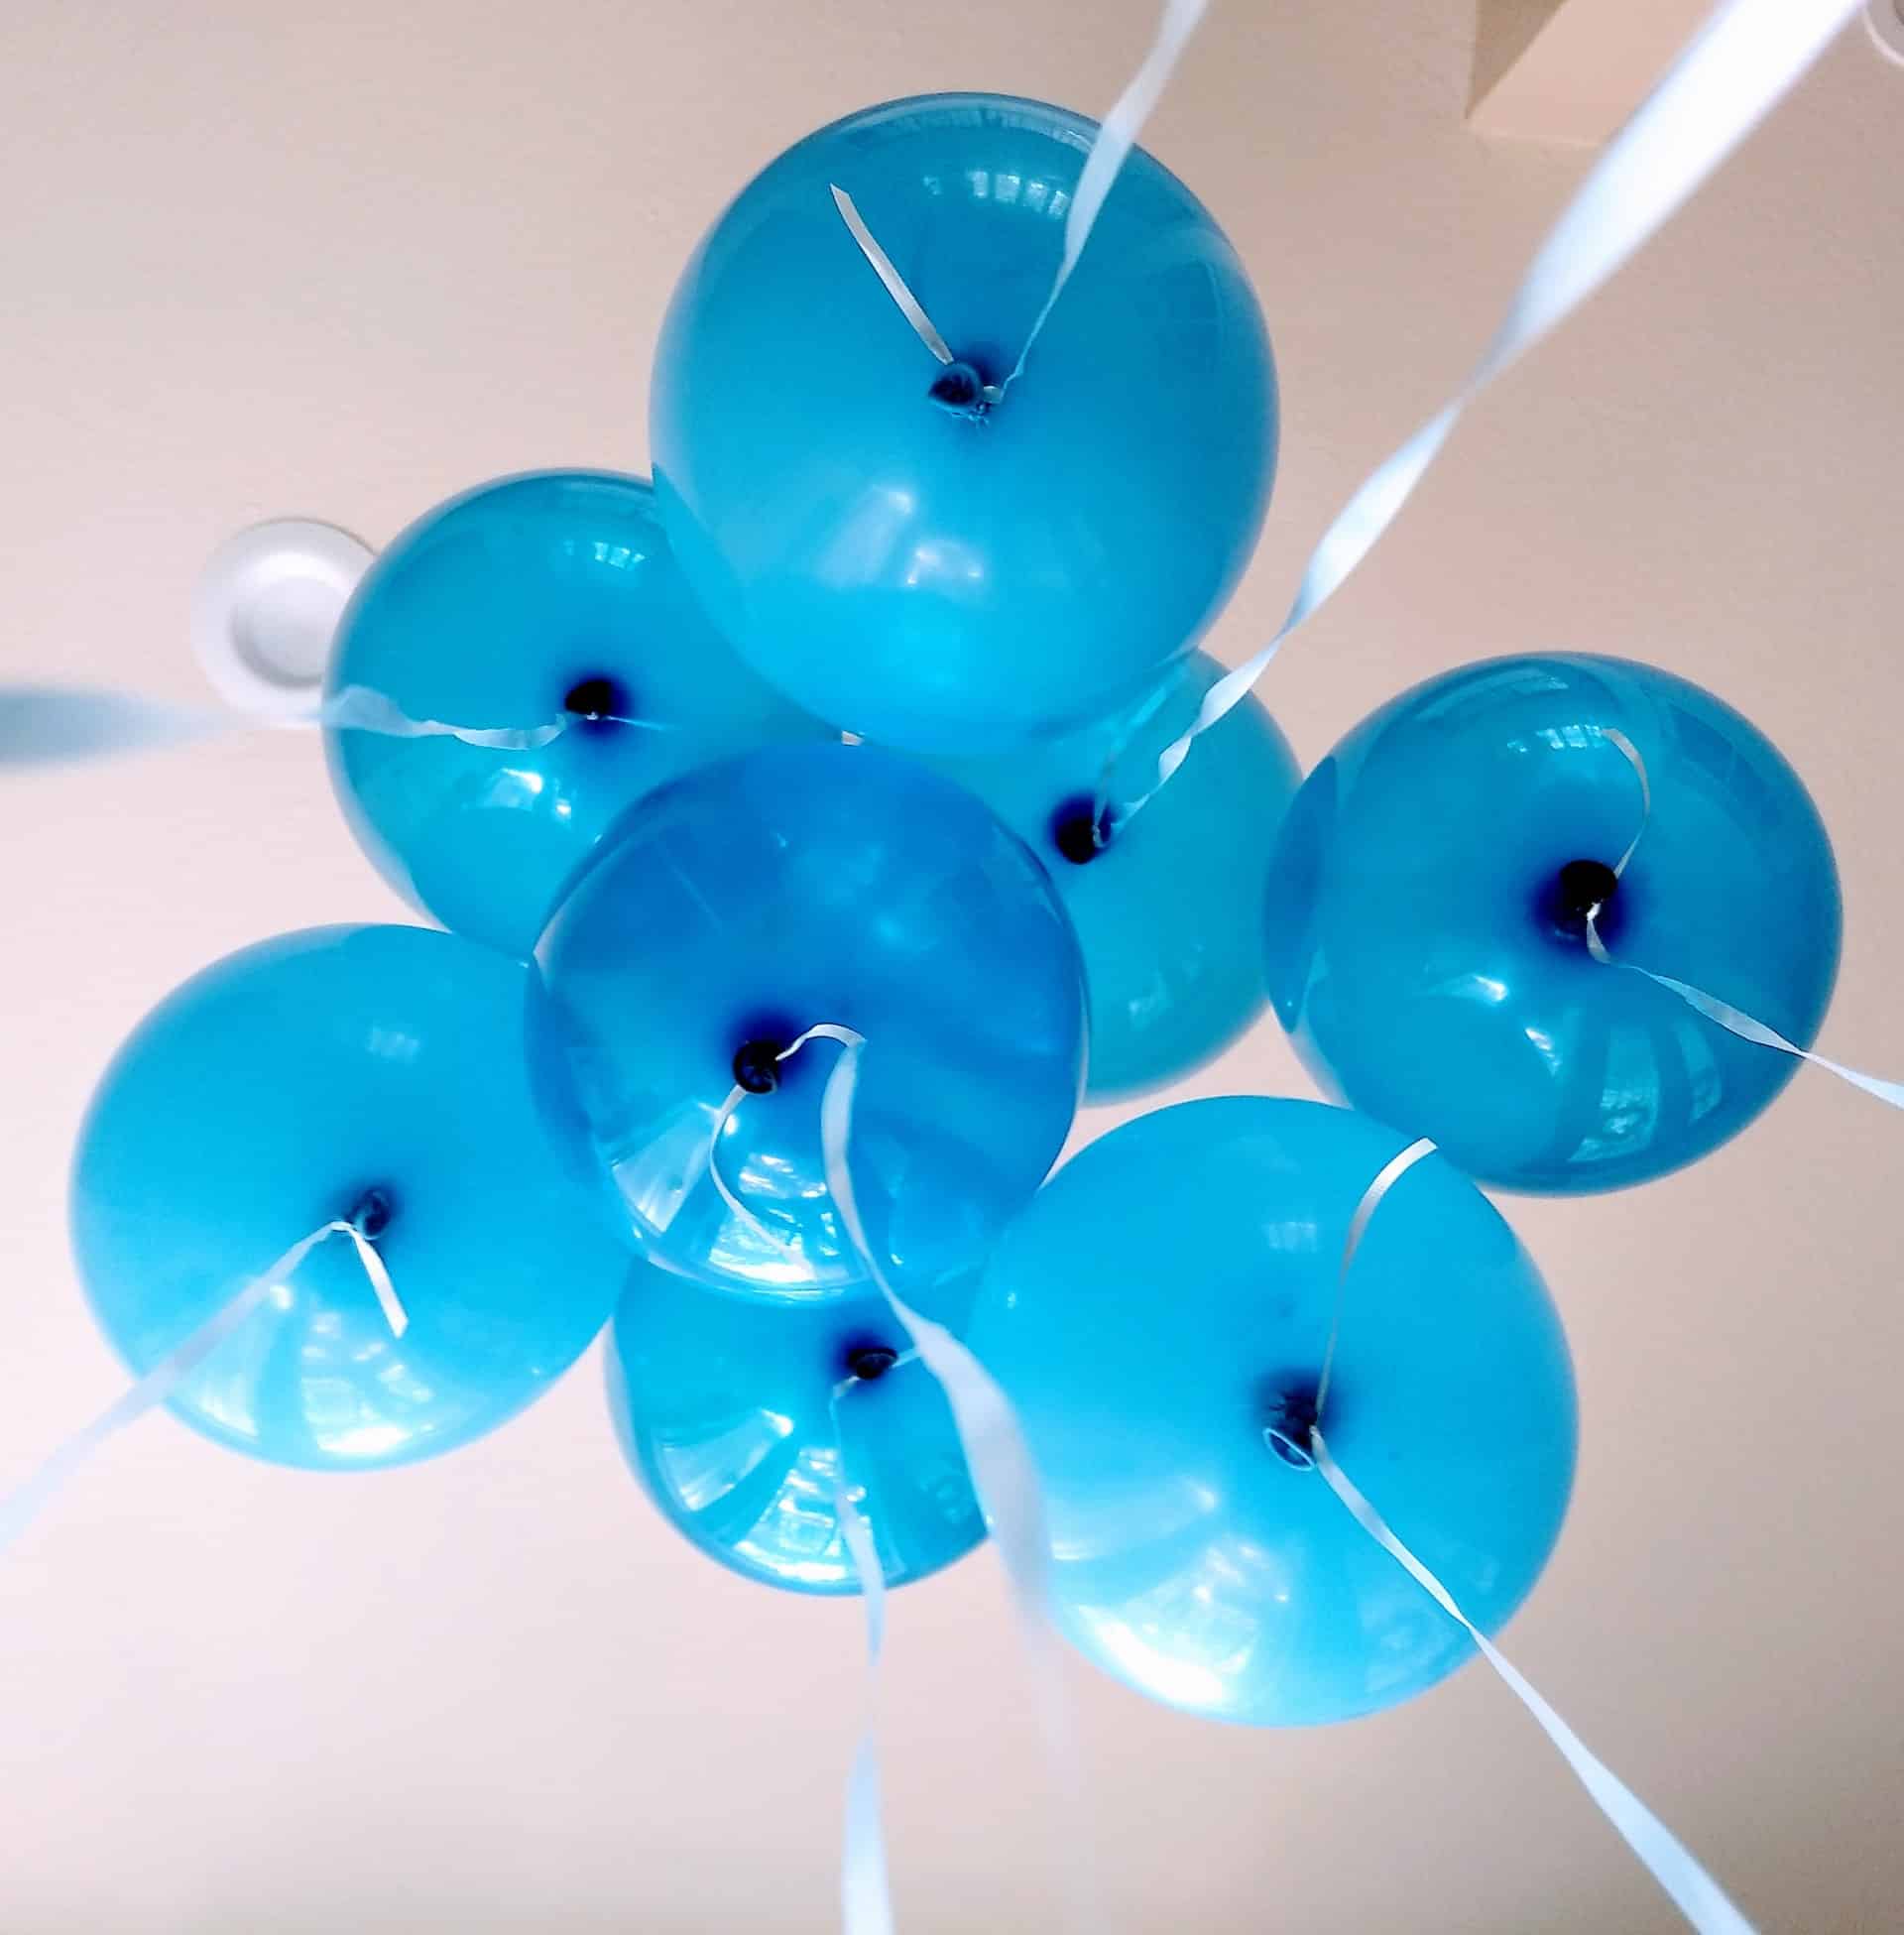 Helium Ballonnen